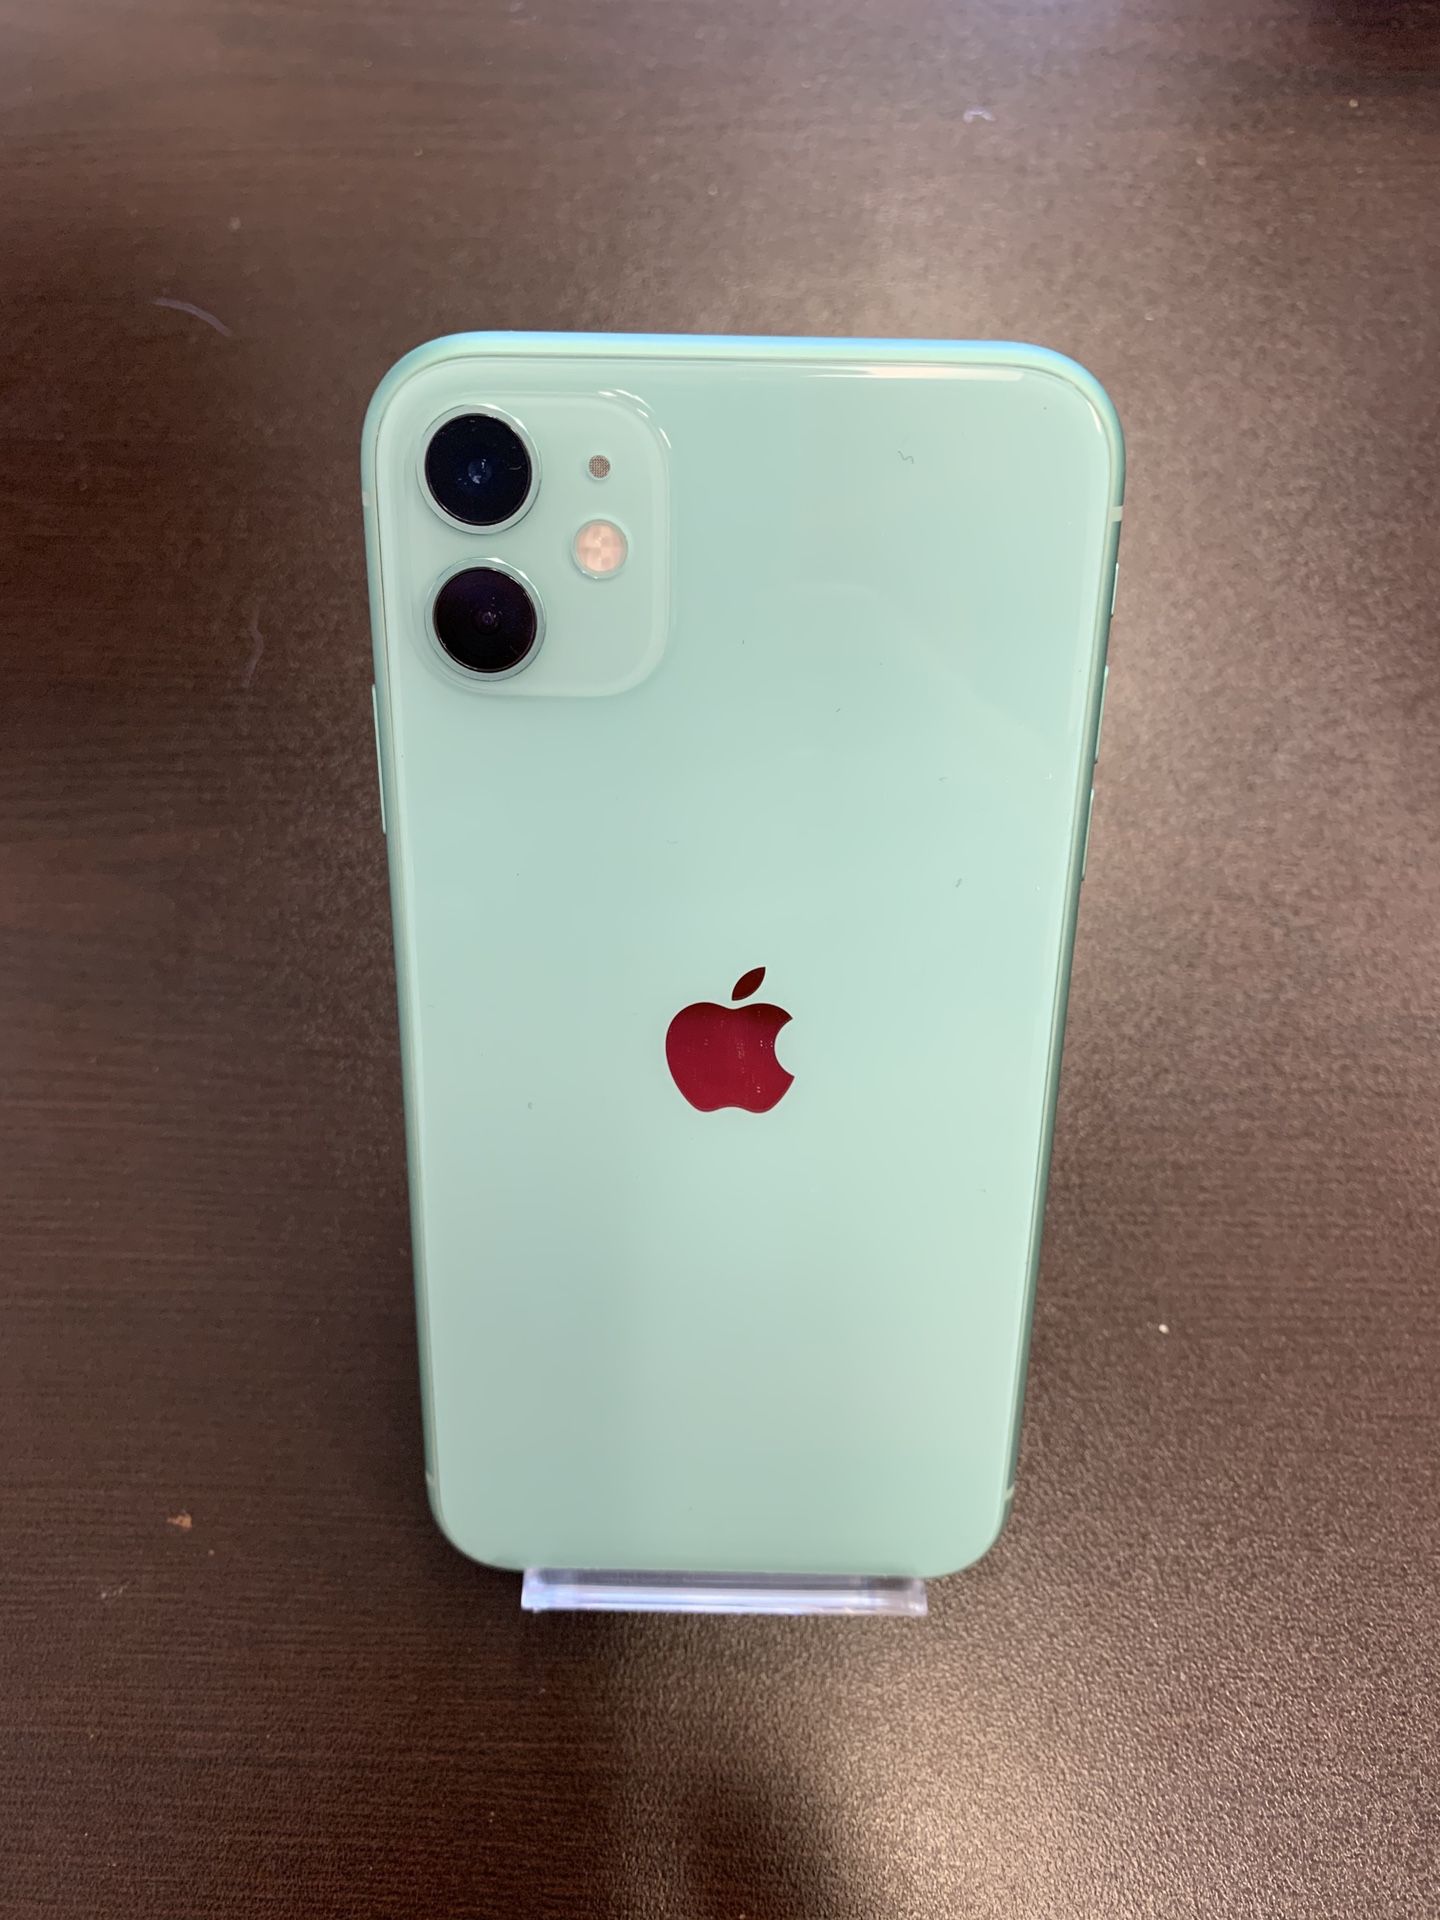 iPhone 11 - Teal - Factory Unlocked